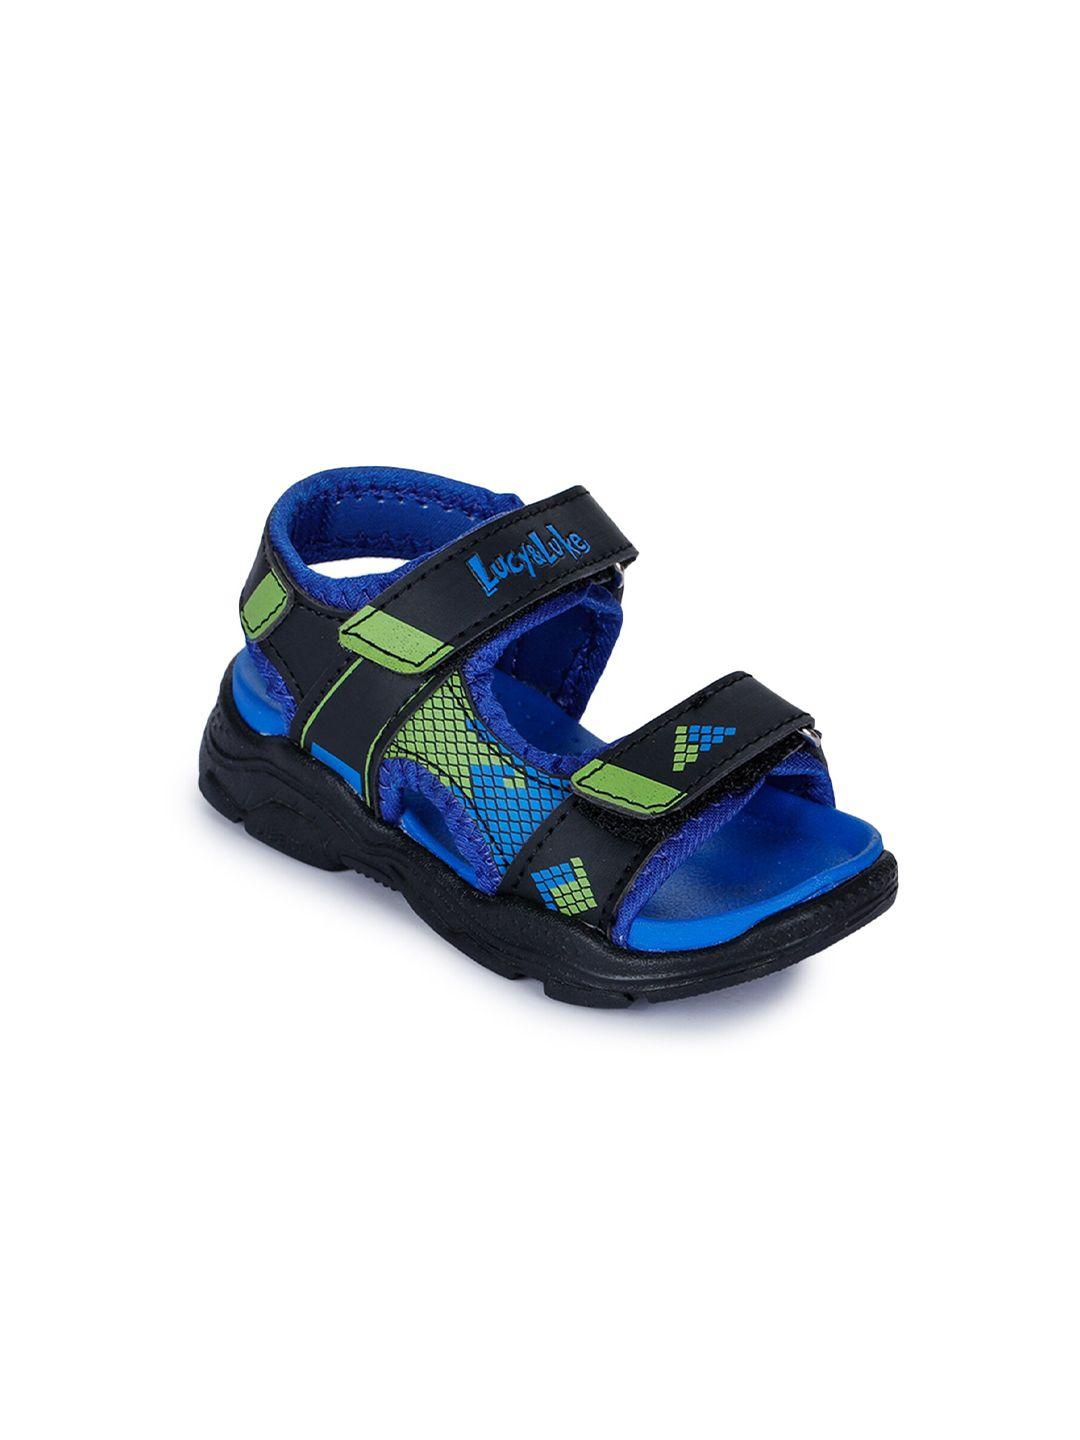 liberty-kids-blue-&-black-sports-sandals